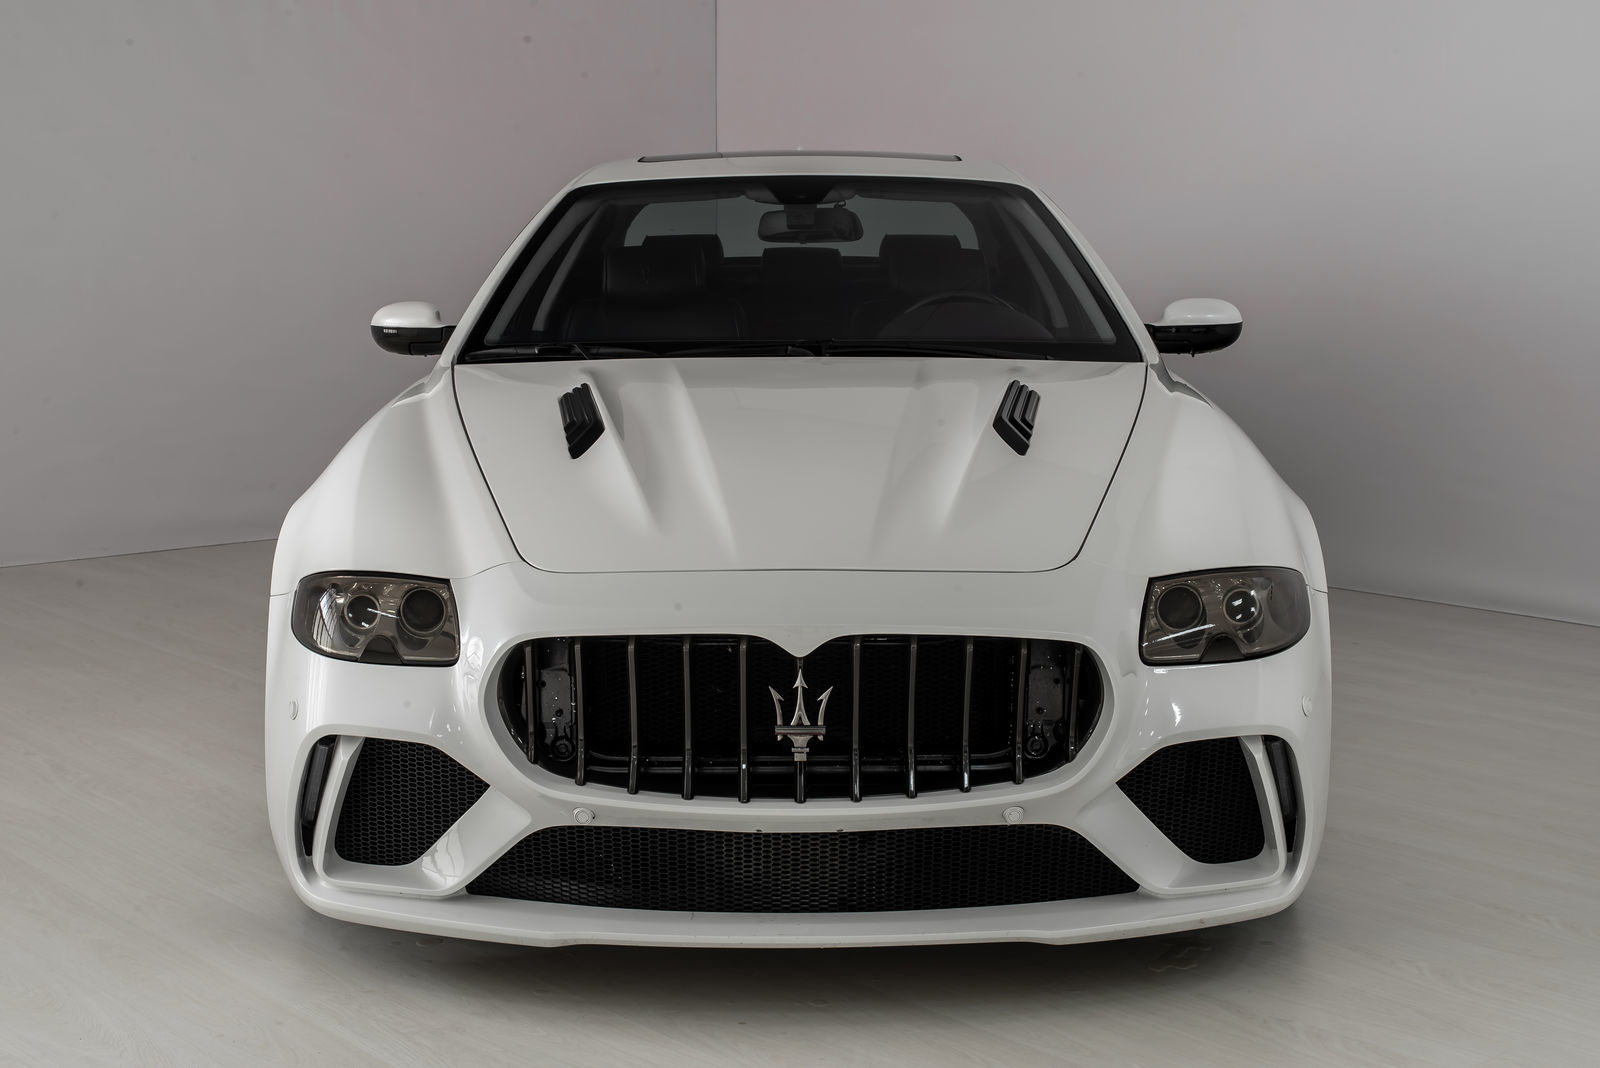 SCL PERFORMANCE body kit for Maserati Quattroporte New model